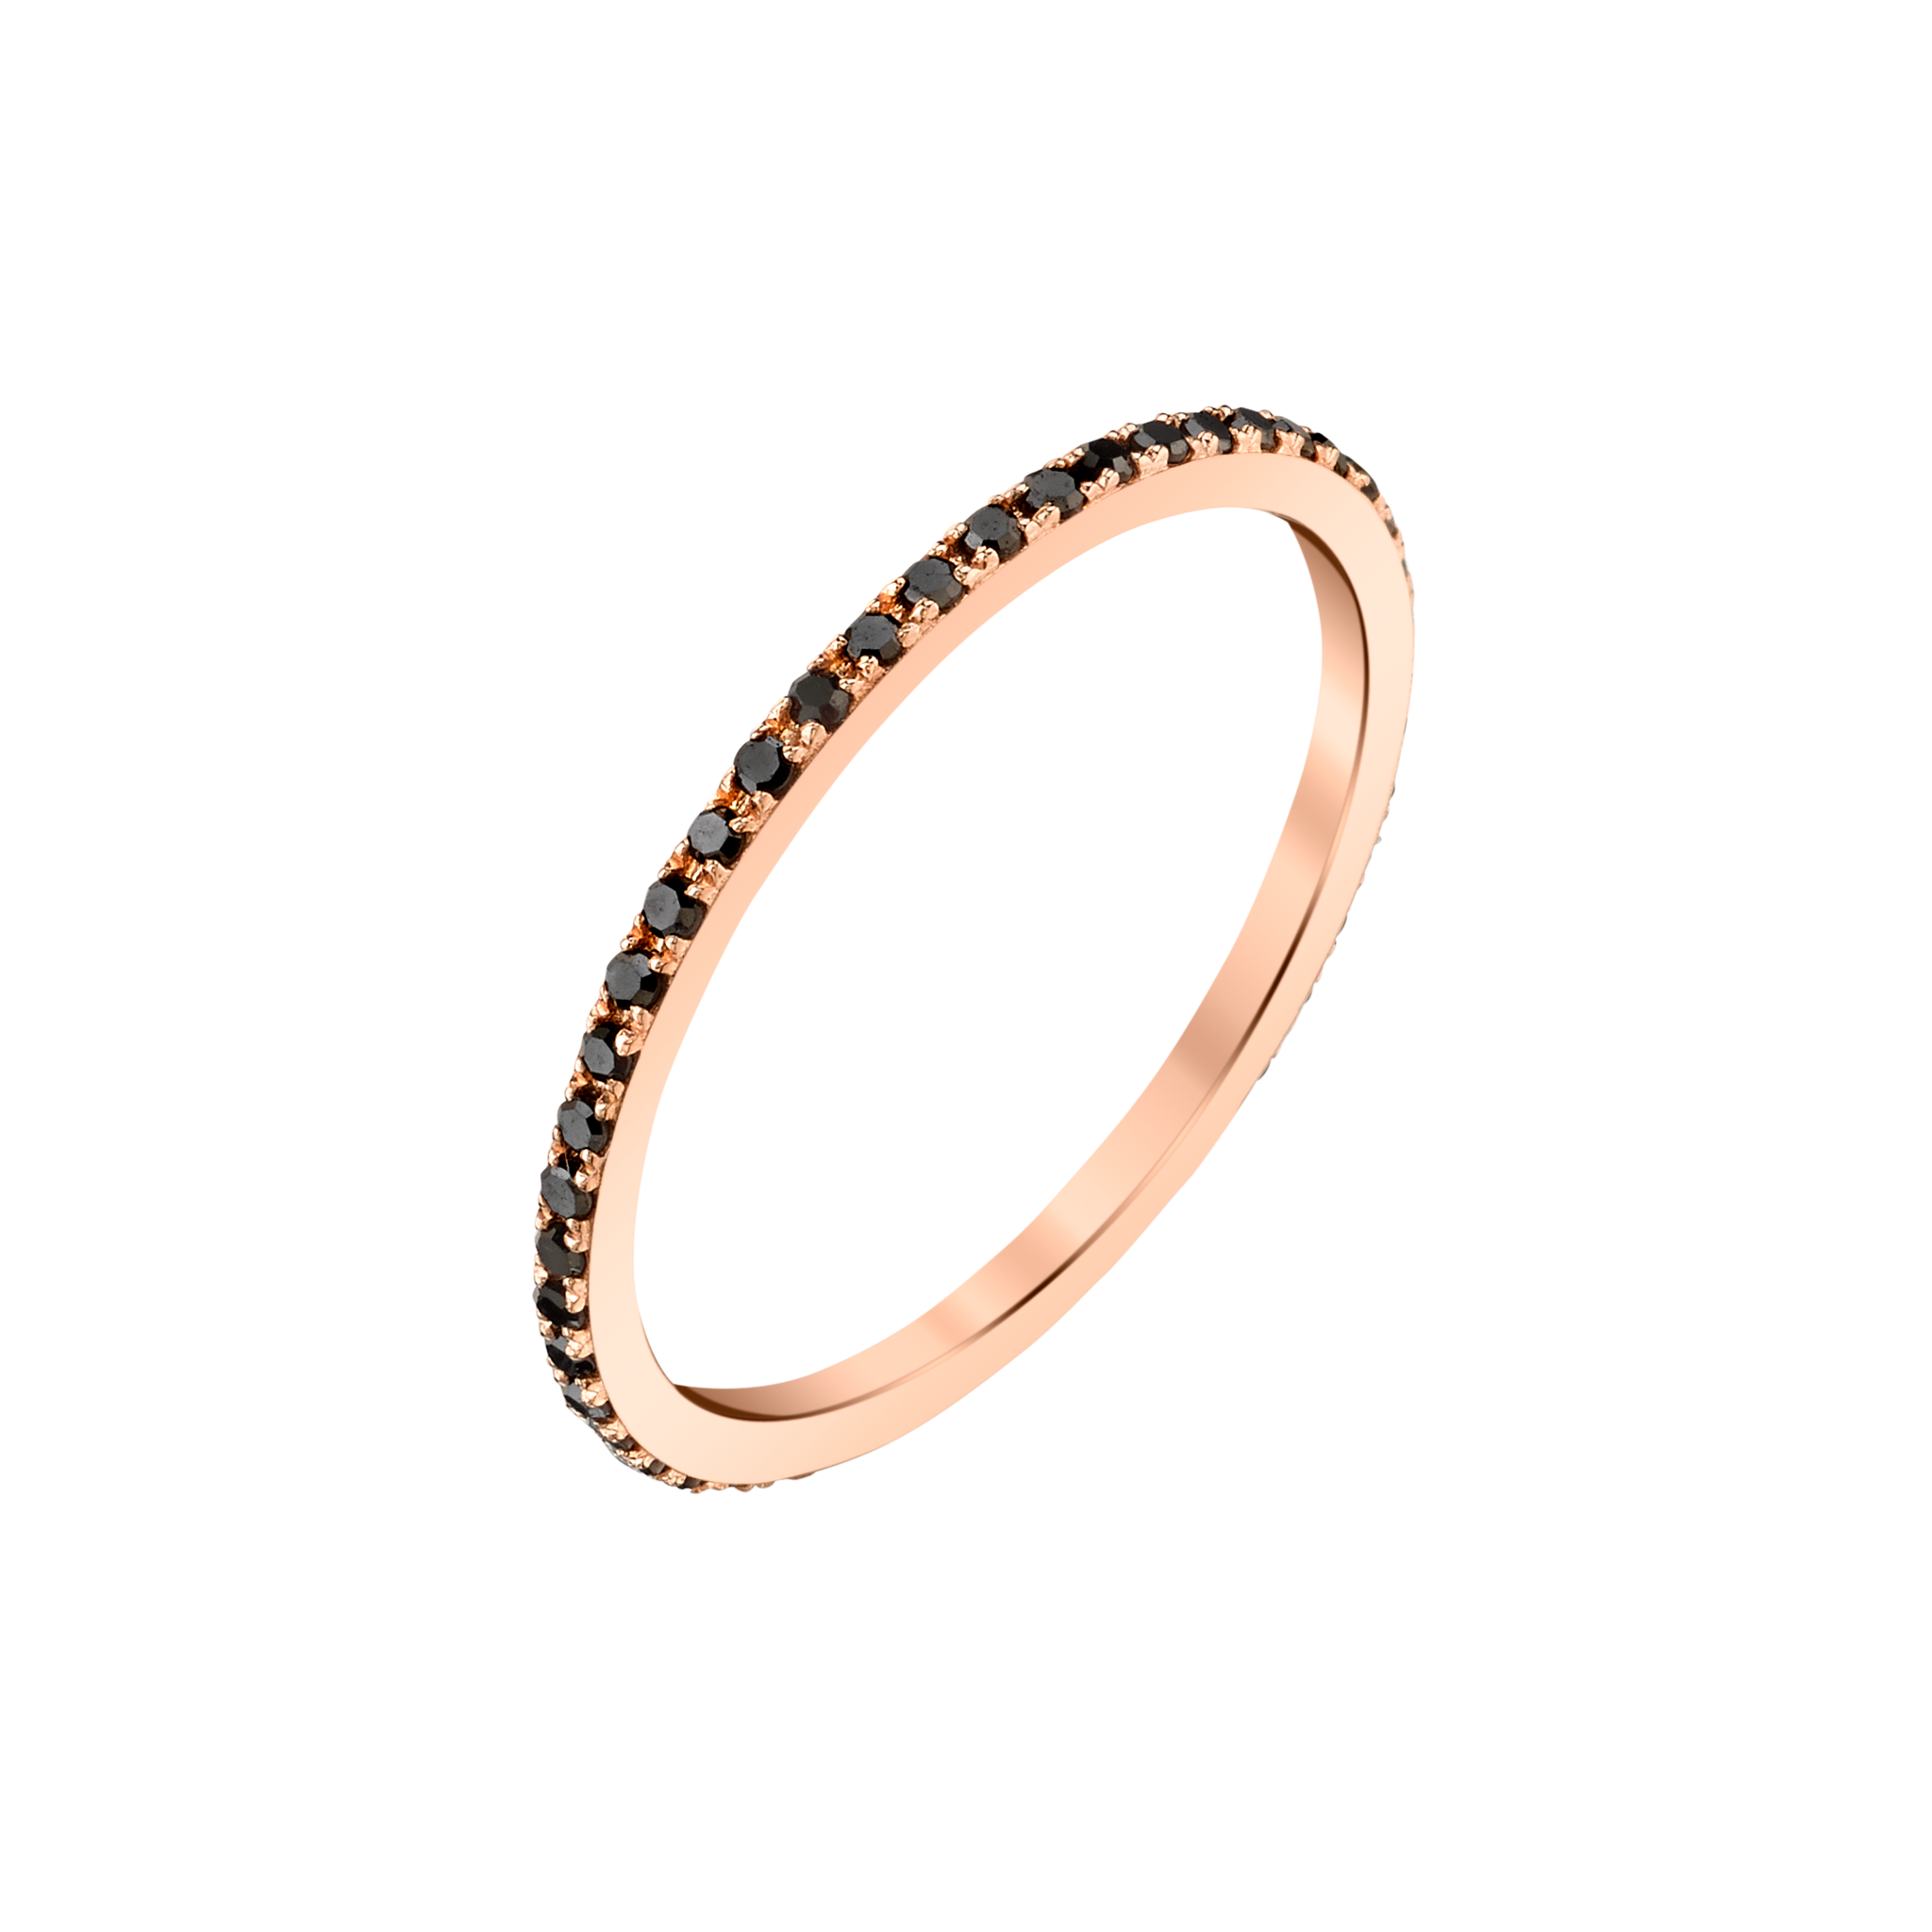 Axis Ring with Black Pavé Diamonds - Gabriela Artigas